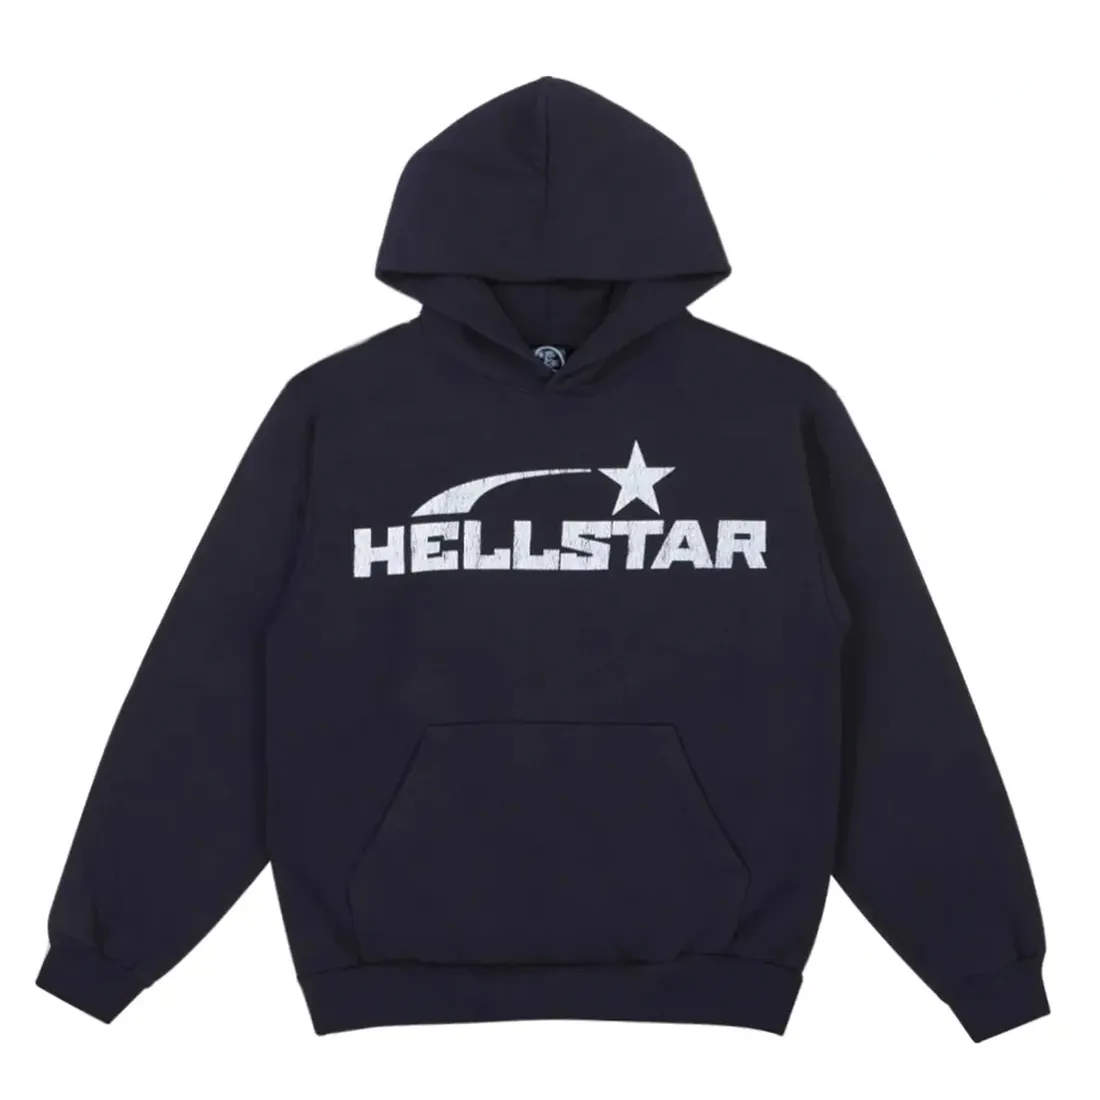 Hellstar Hoodie A Streetwear Staple Redefining Urban Fashion